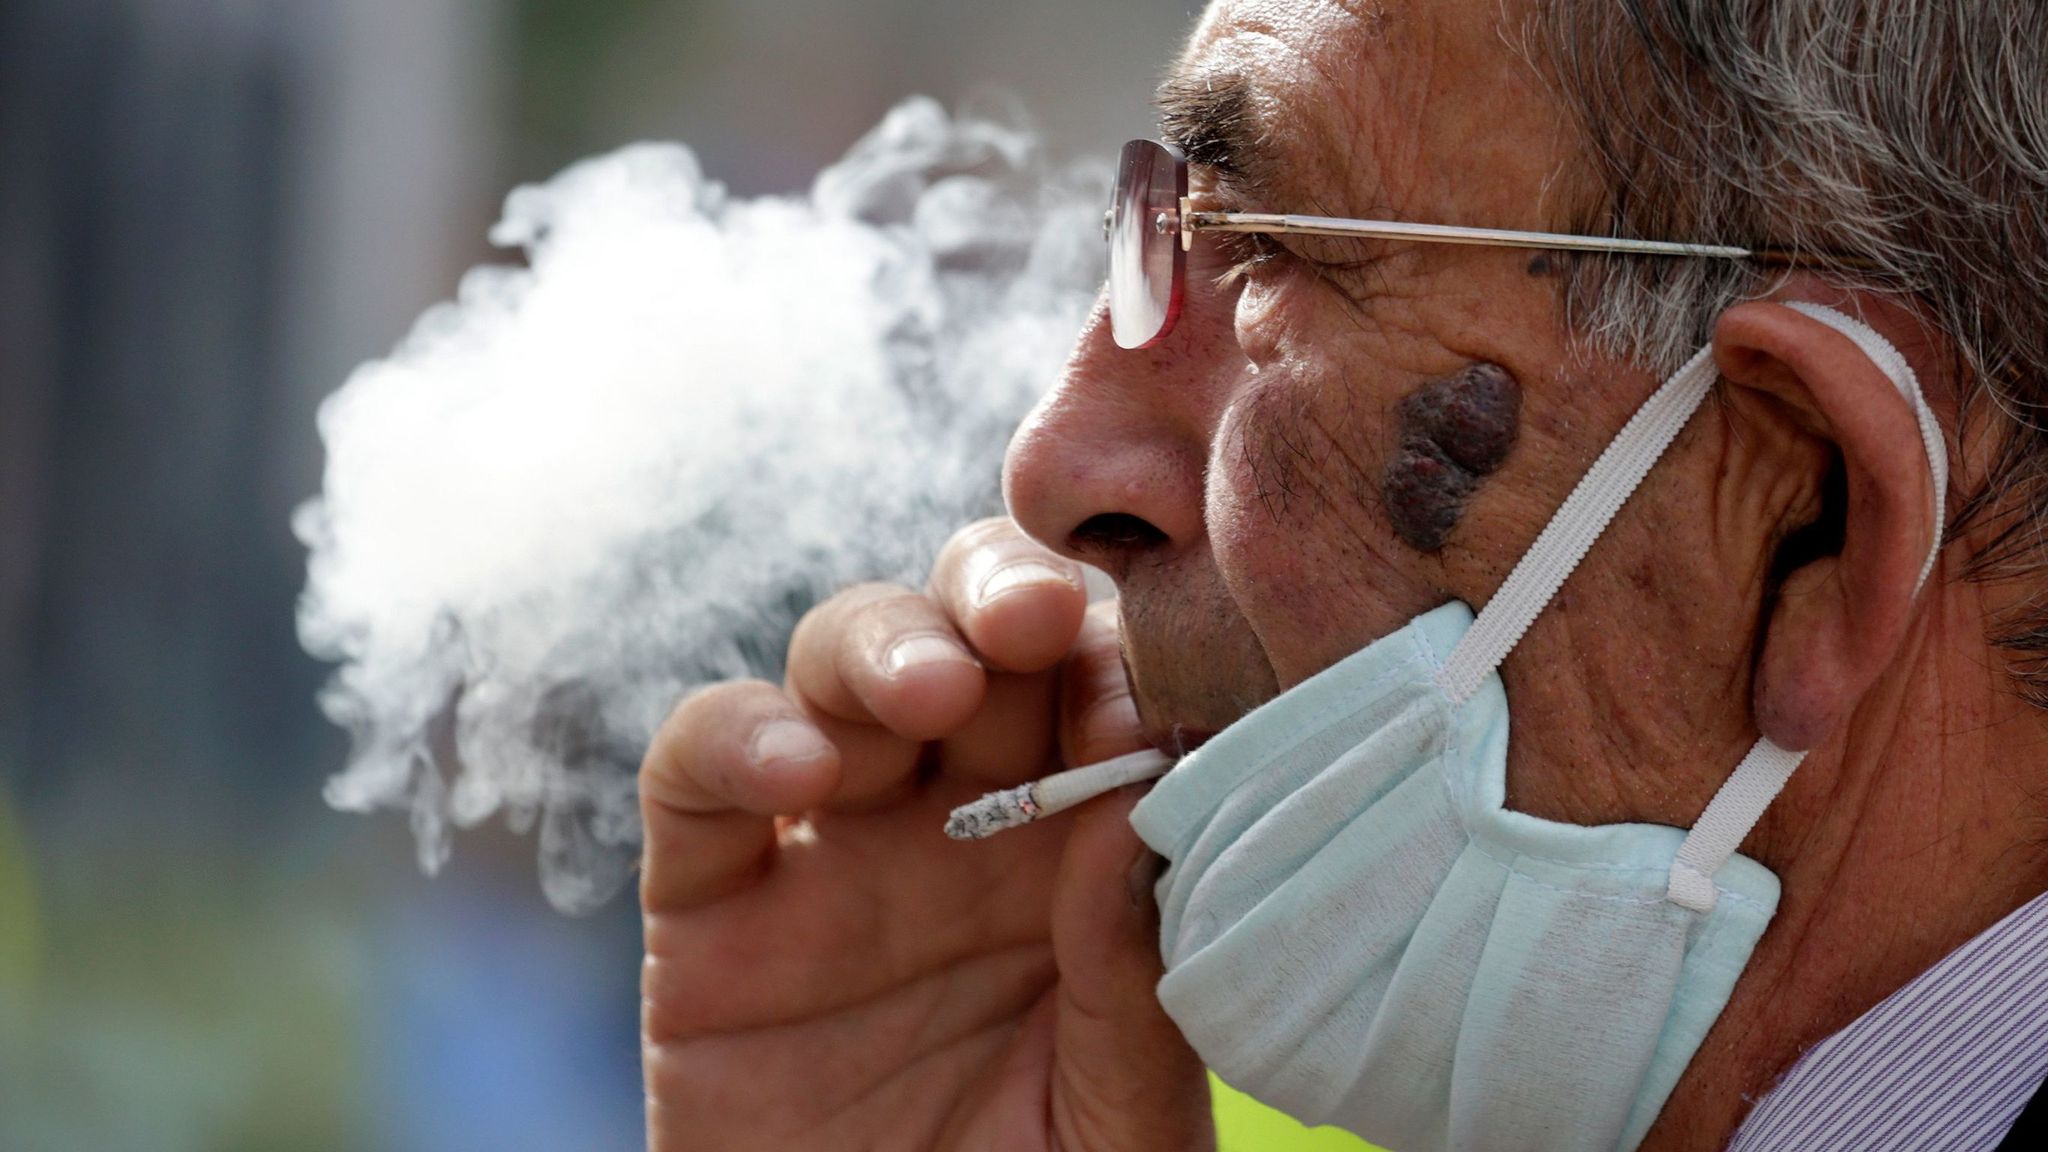 Coronavirus: 1.3 billion smokers urged to quit to reduce COVID-19 risks |  World News | Sky News